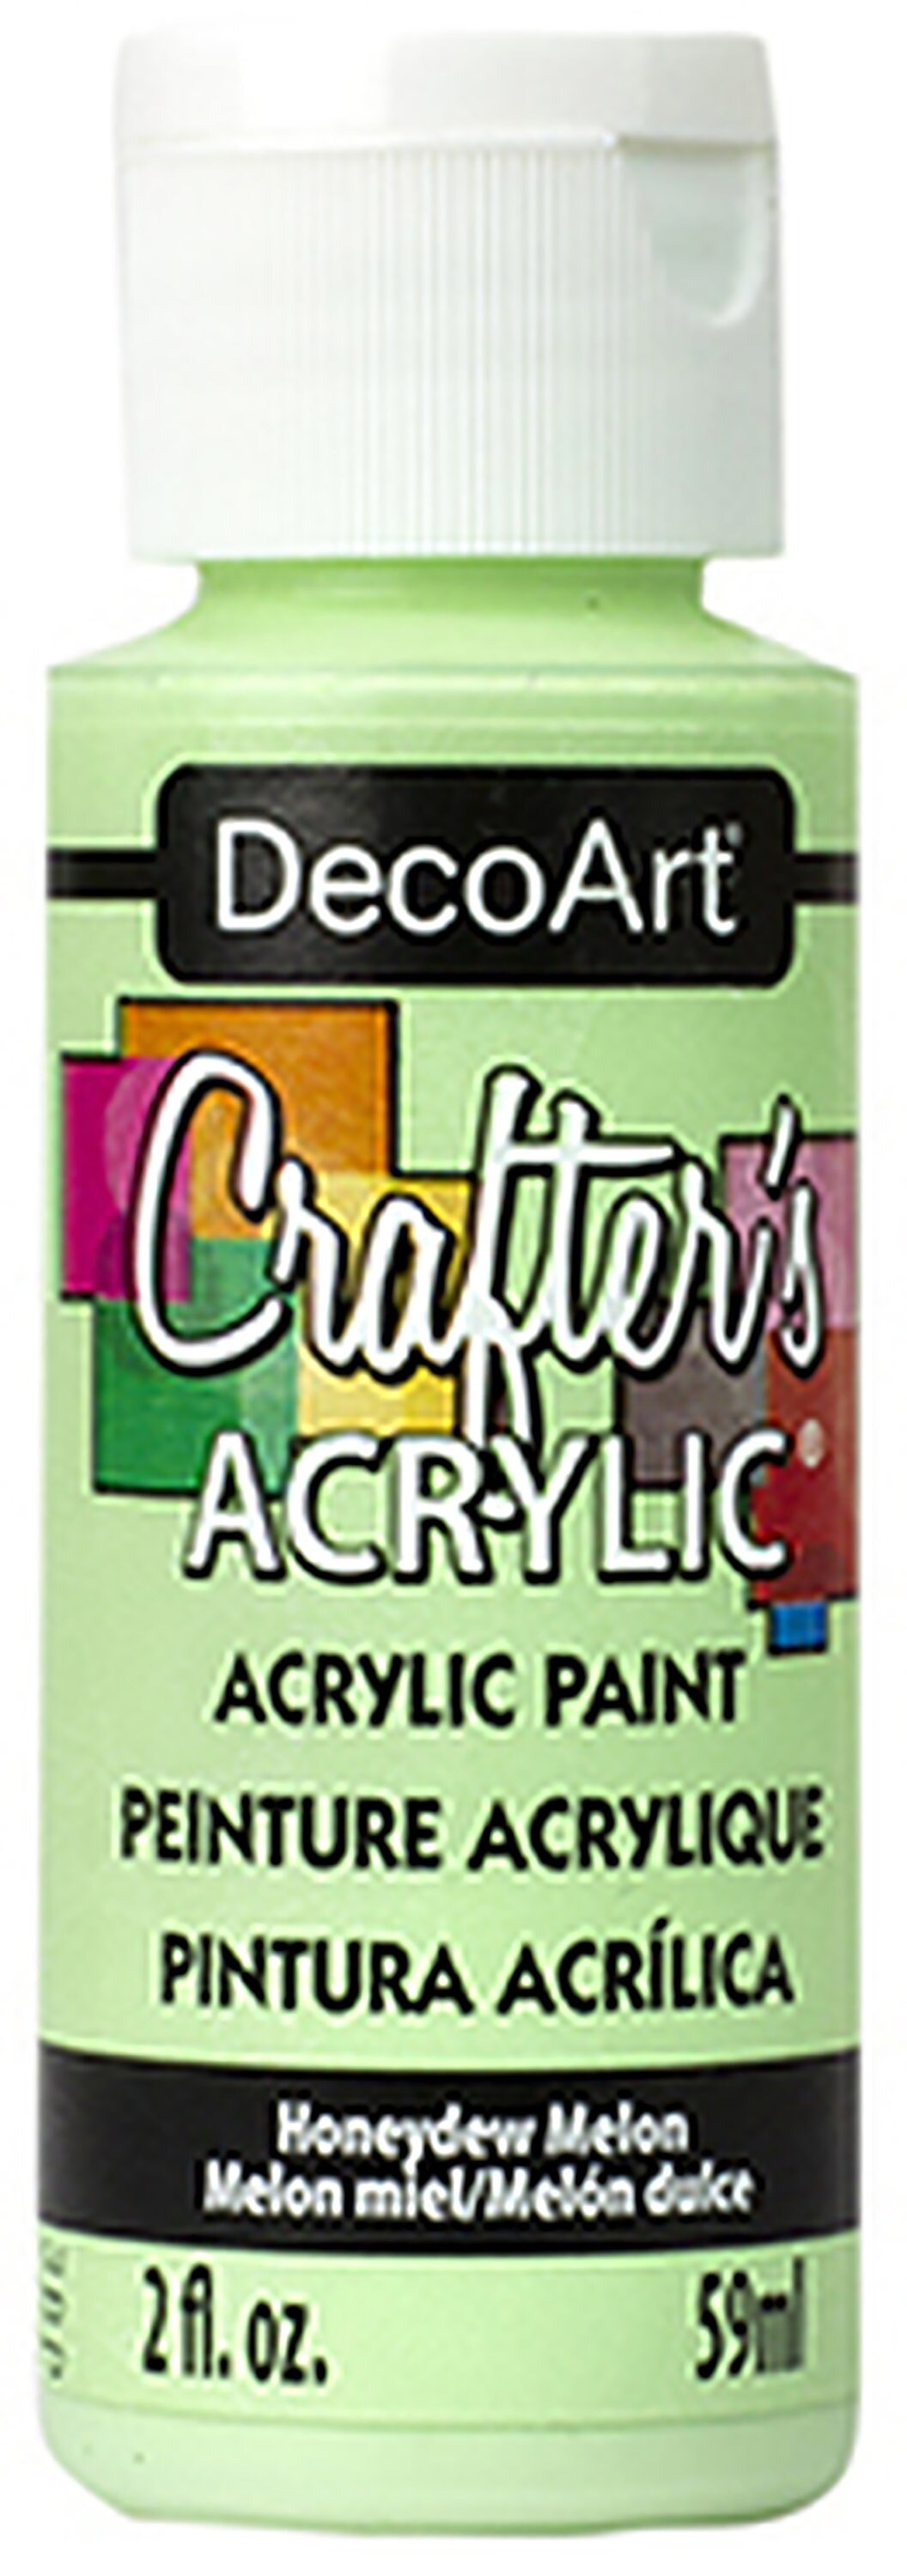 Decoart Crafters Acrylic Paints Gold Shades 59ml 2oz Bottles -  Denmark